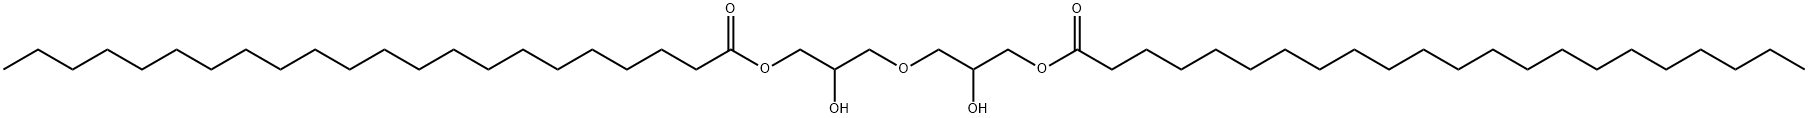 oxybis(2-hydroxypropane-3,1-diyl) didocosanoate|